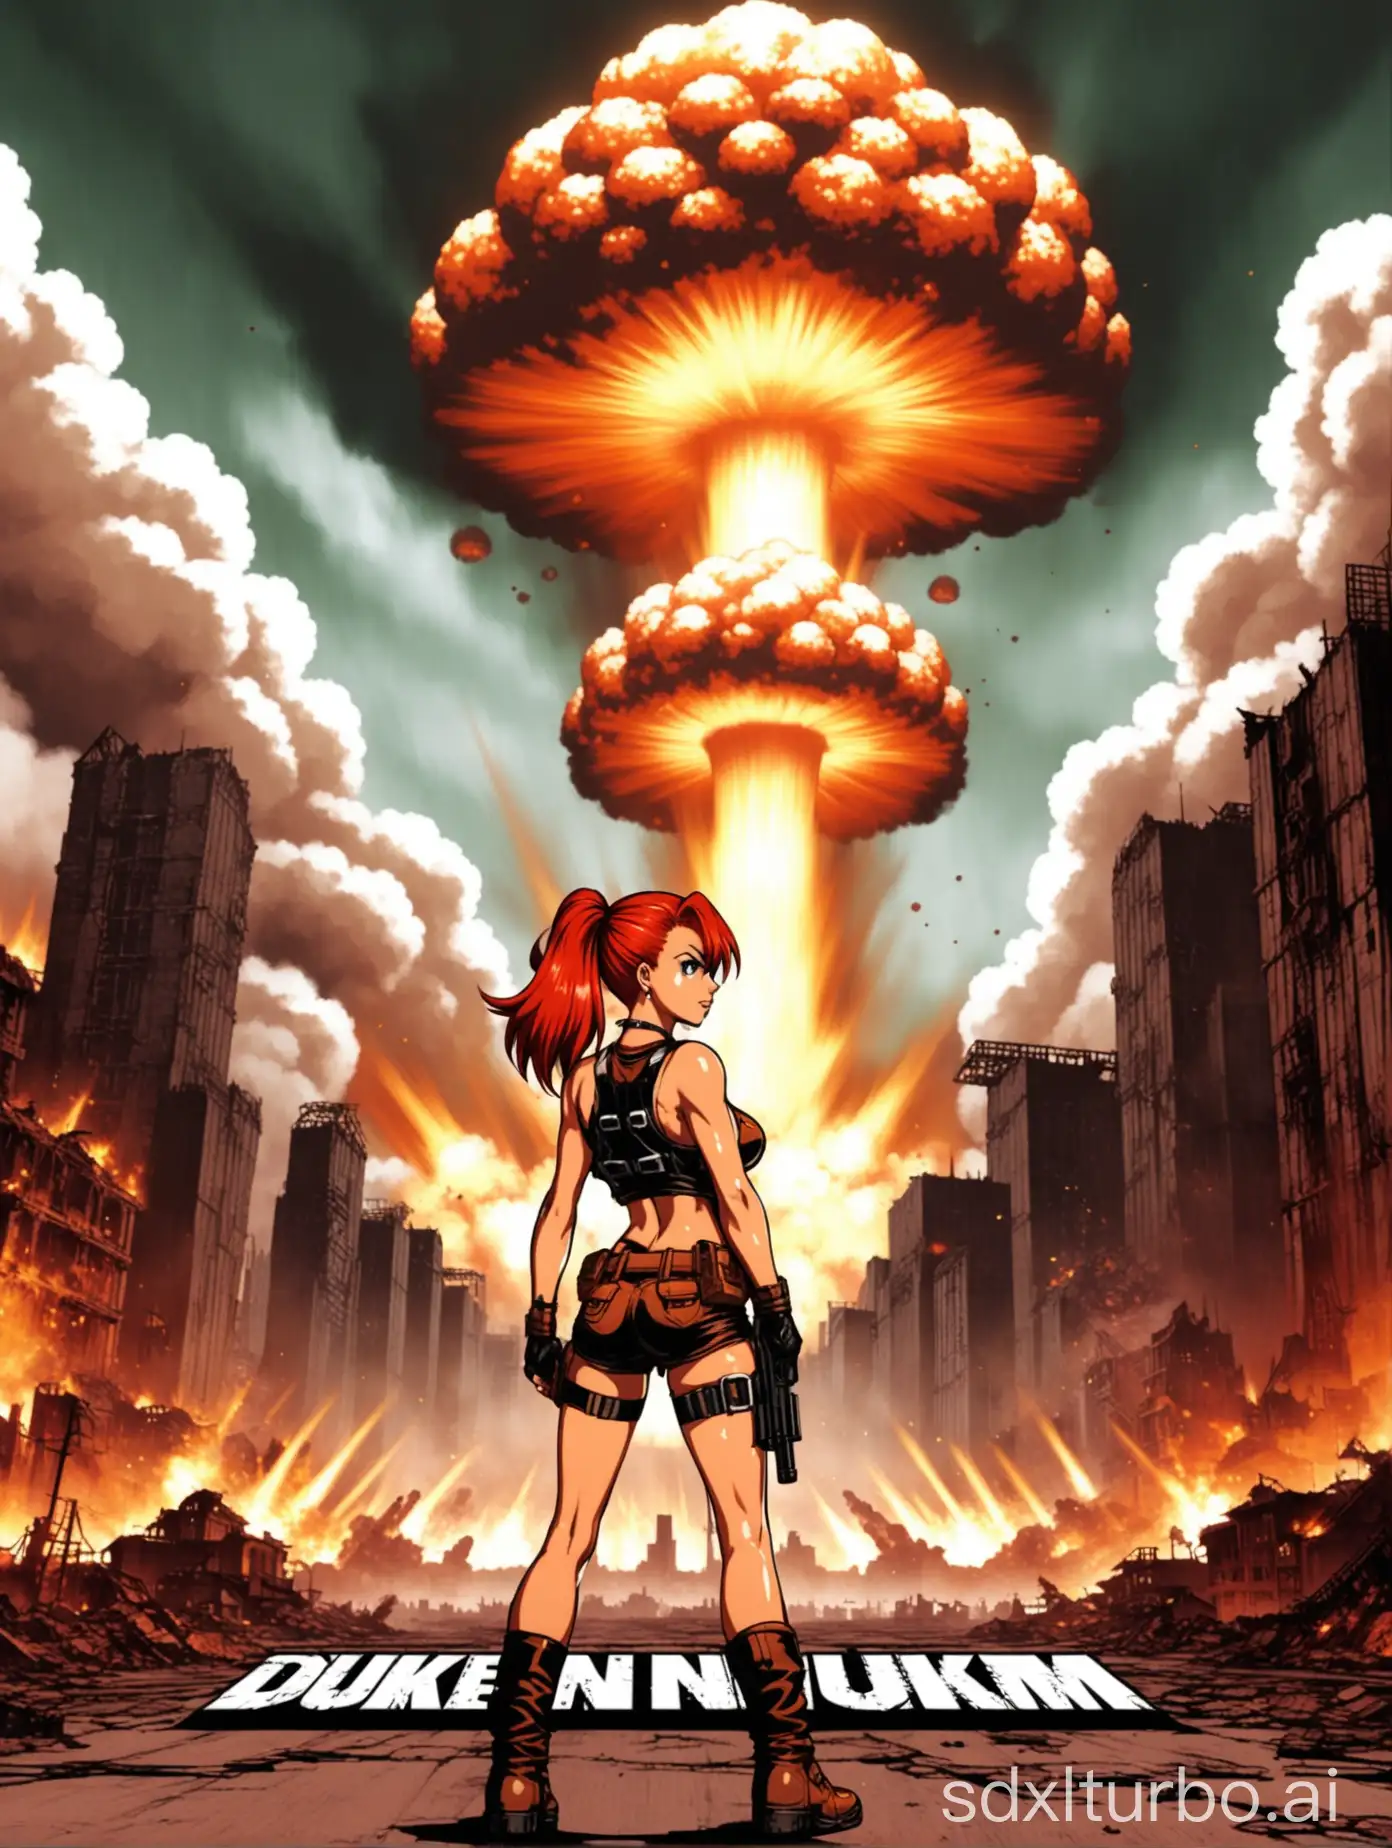 redhead anime girl in duke nukem 3d title screen, mushroom cloud in the background, destroyed city settting